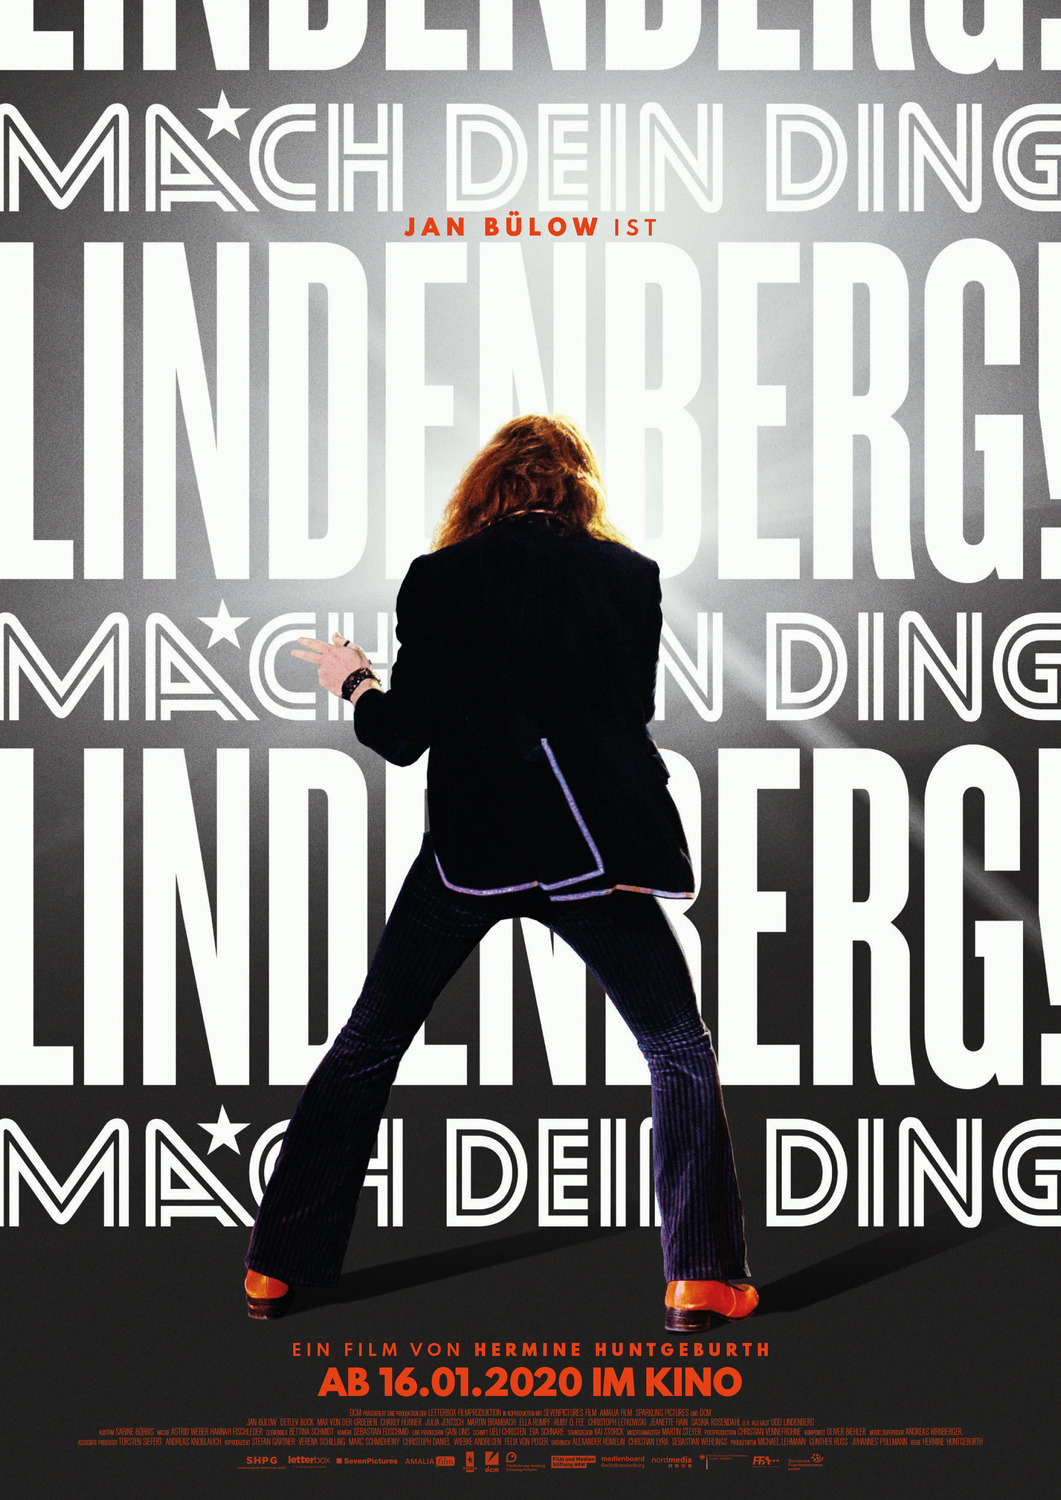 Extra Large Movie Poster Image for Lindenberg! Mach dein Ding 